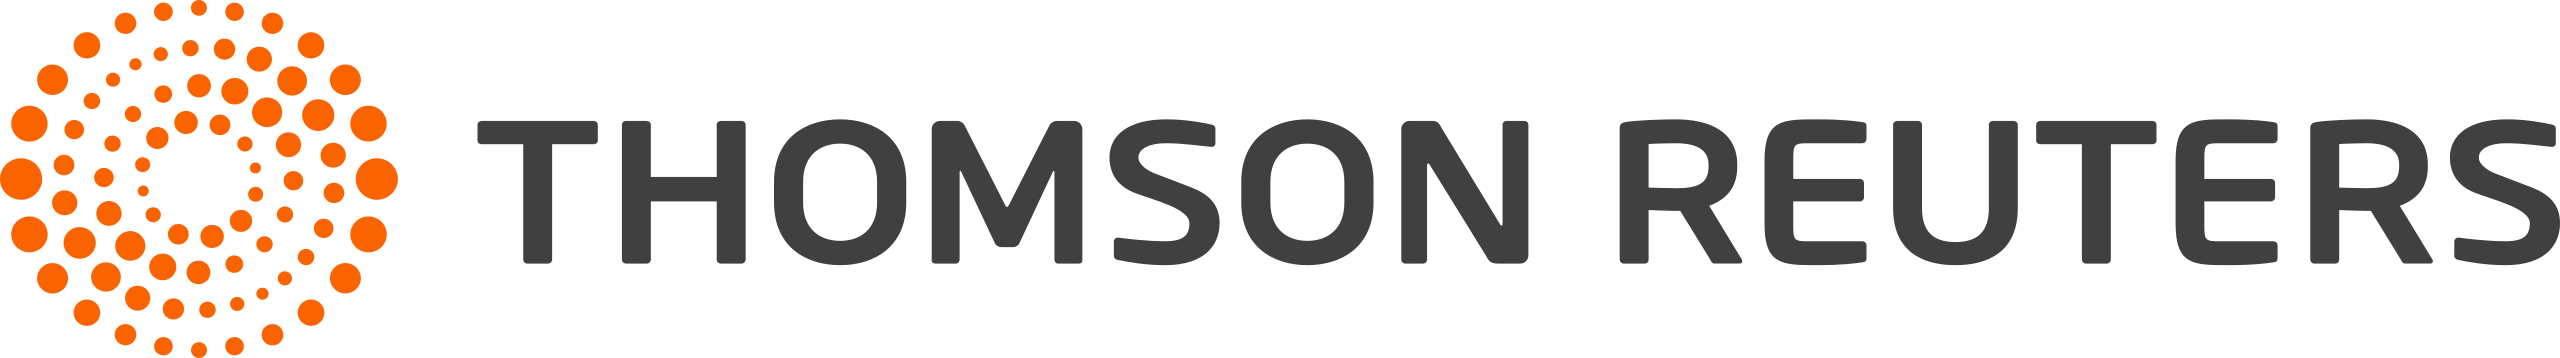 Thomson_Reuters_logo